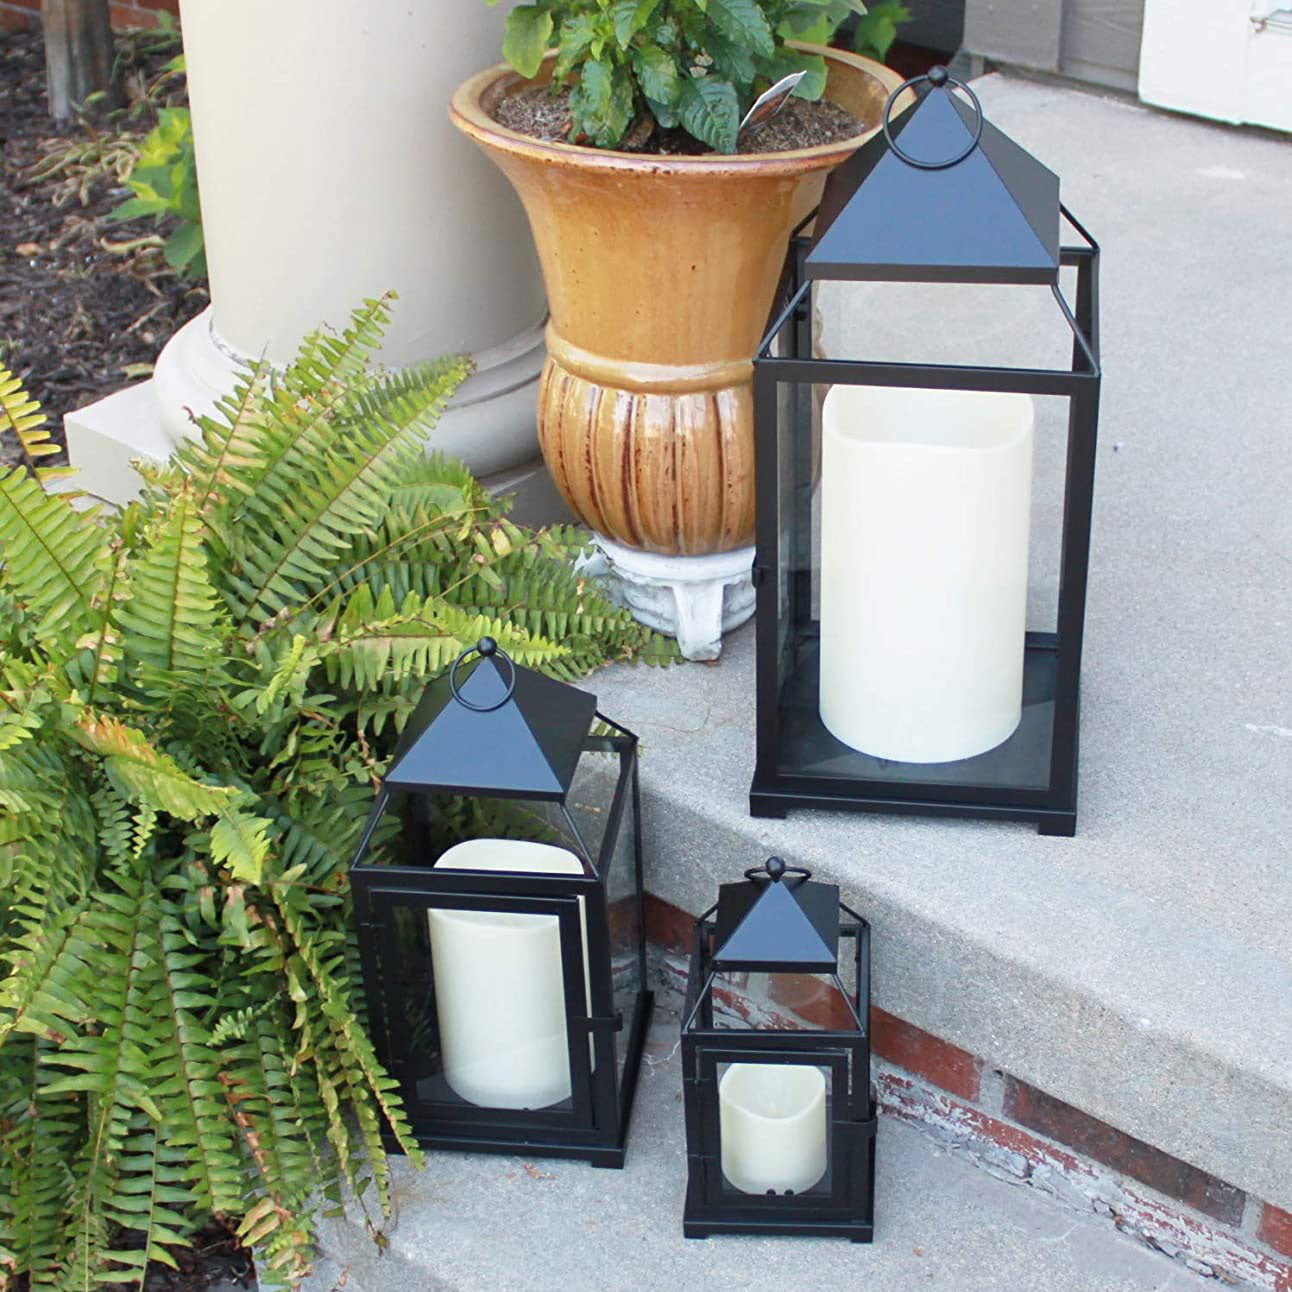 Pebble Lane Living Indoor /& Outdoor Hanging Bristle Candle Lanterns Assorted Set of 3 Black Powder Coated Frame /& Tempered Glass Panes